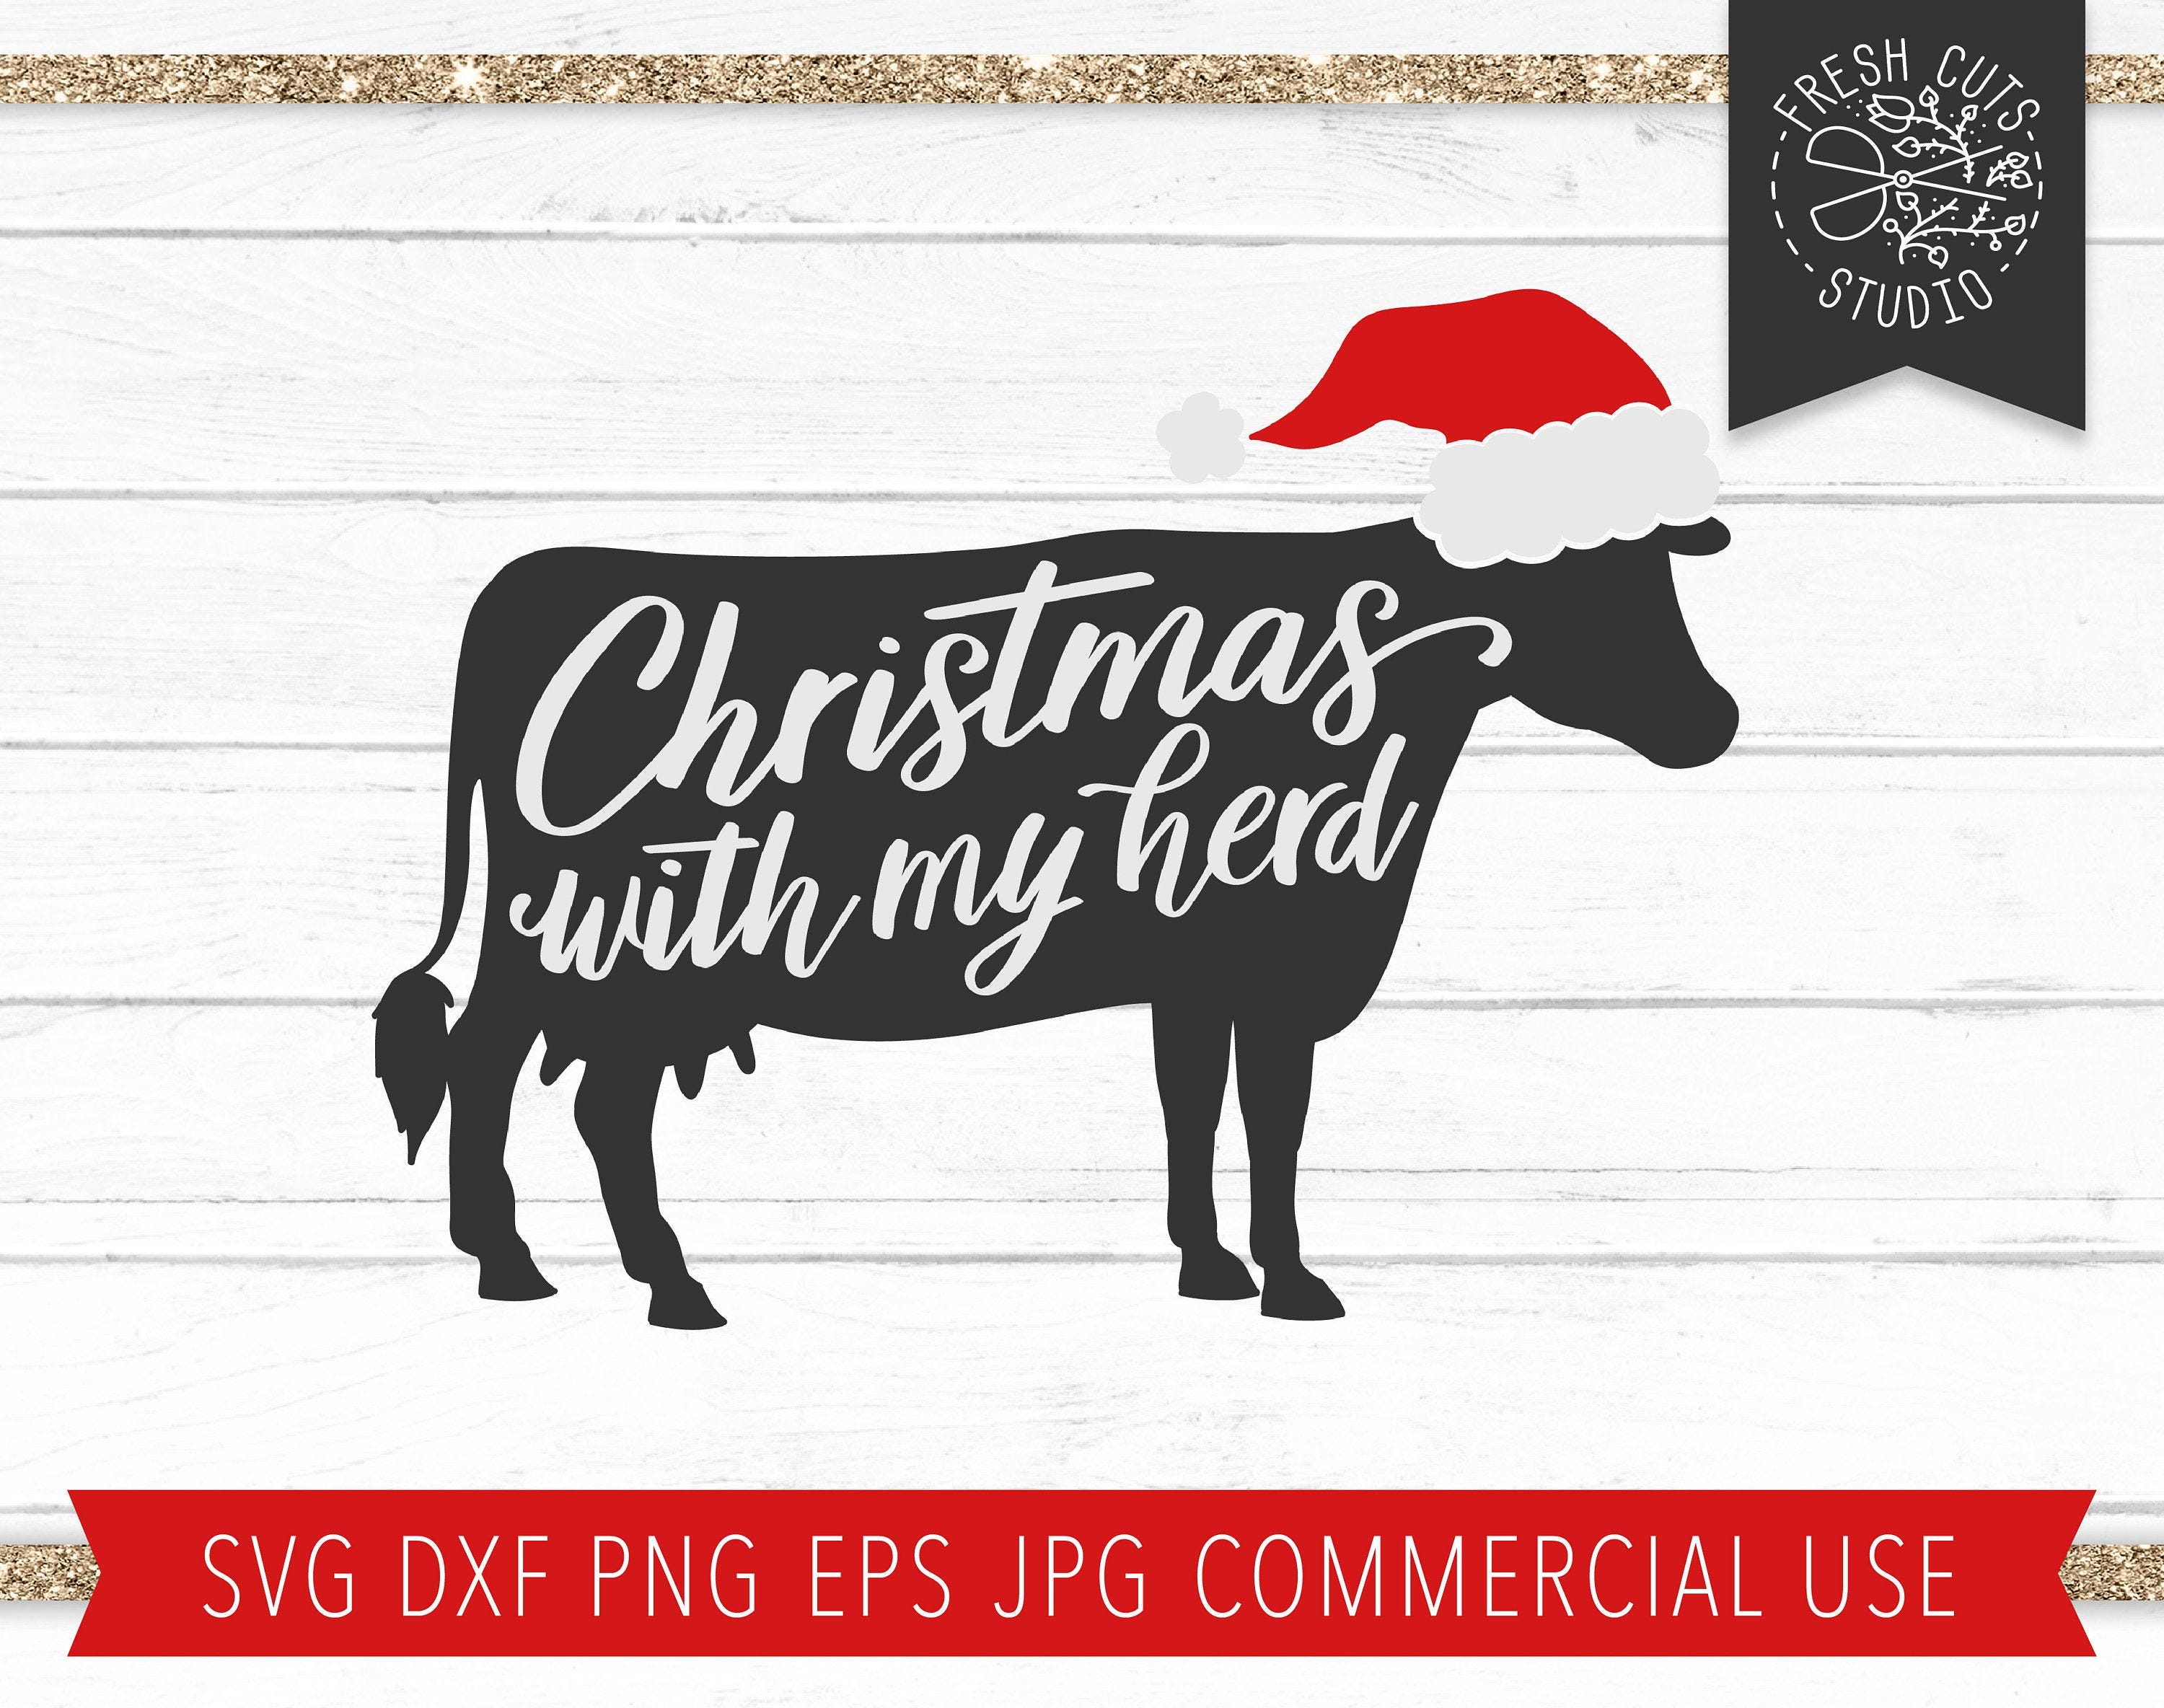 Christmas Cow SVG Cut File for Cricut, Cow Silhouette, Christmas with my Herd svg, Christmas Saying svg, Farm Christmas, Santa Cow svg dxf